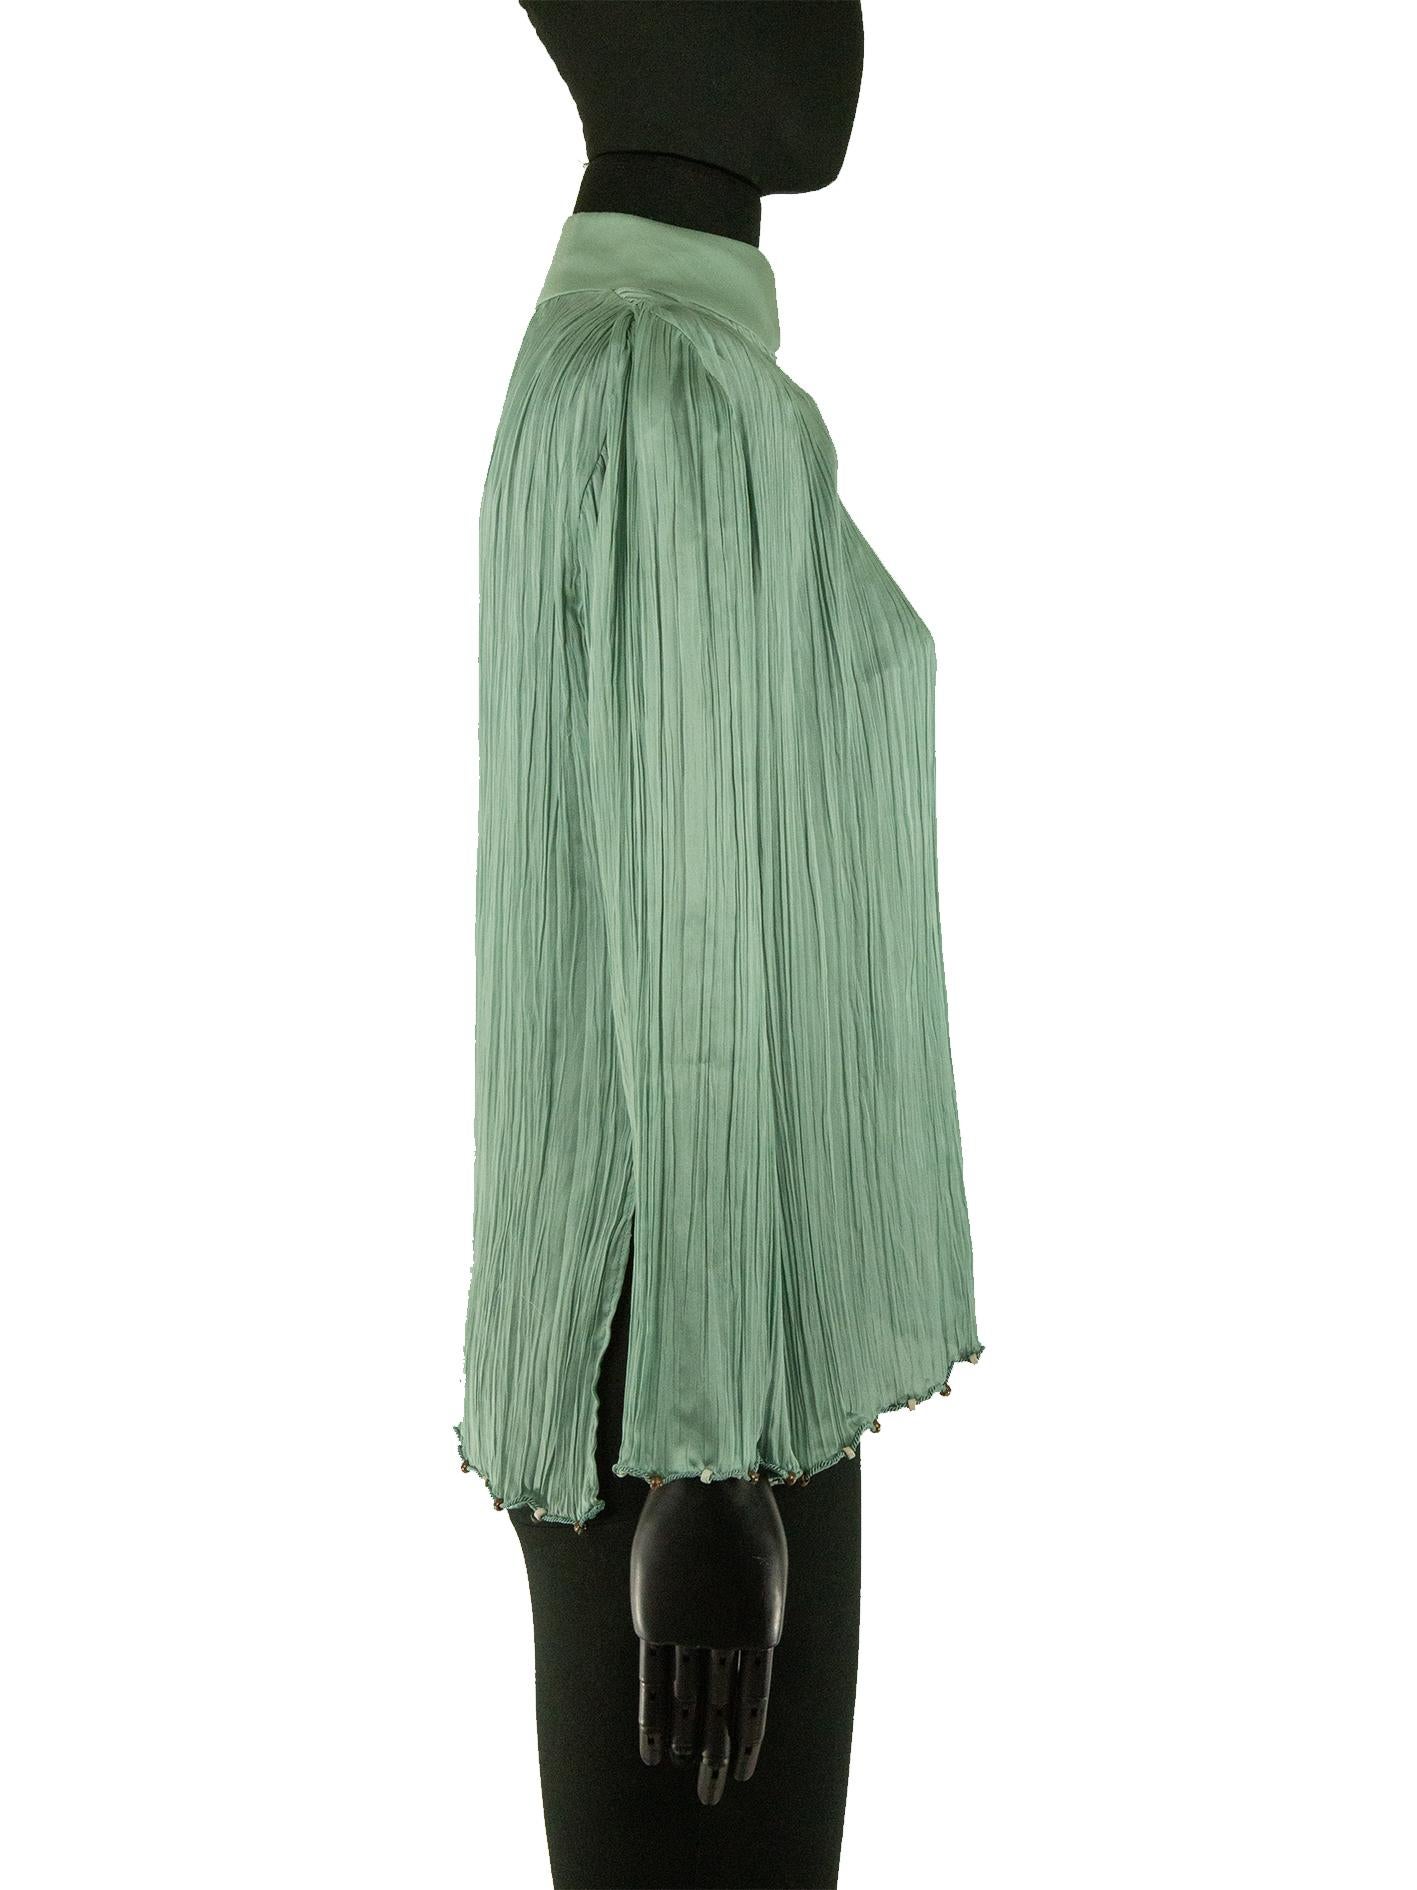 Galliano For Dior 1999 Green Silk Cheongsam Blouse 1